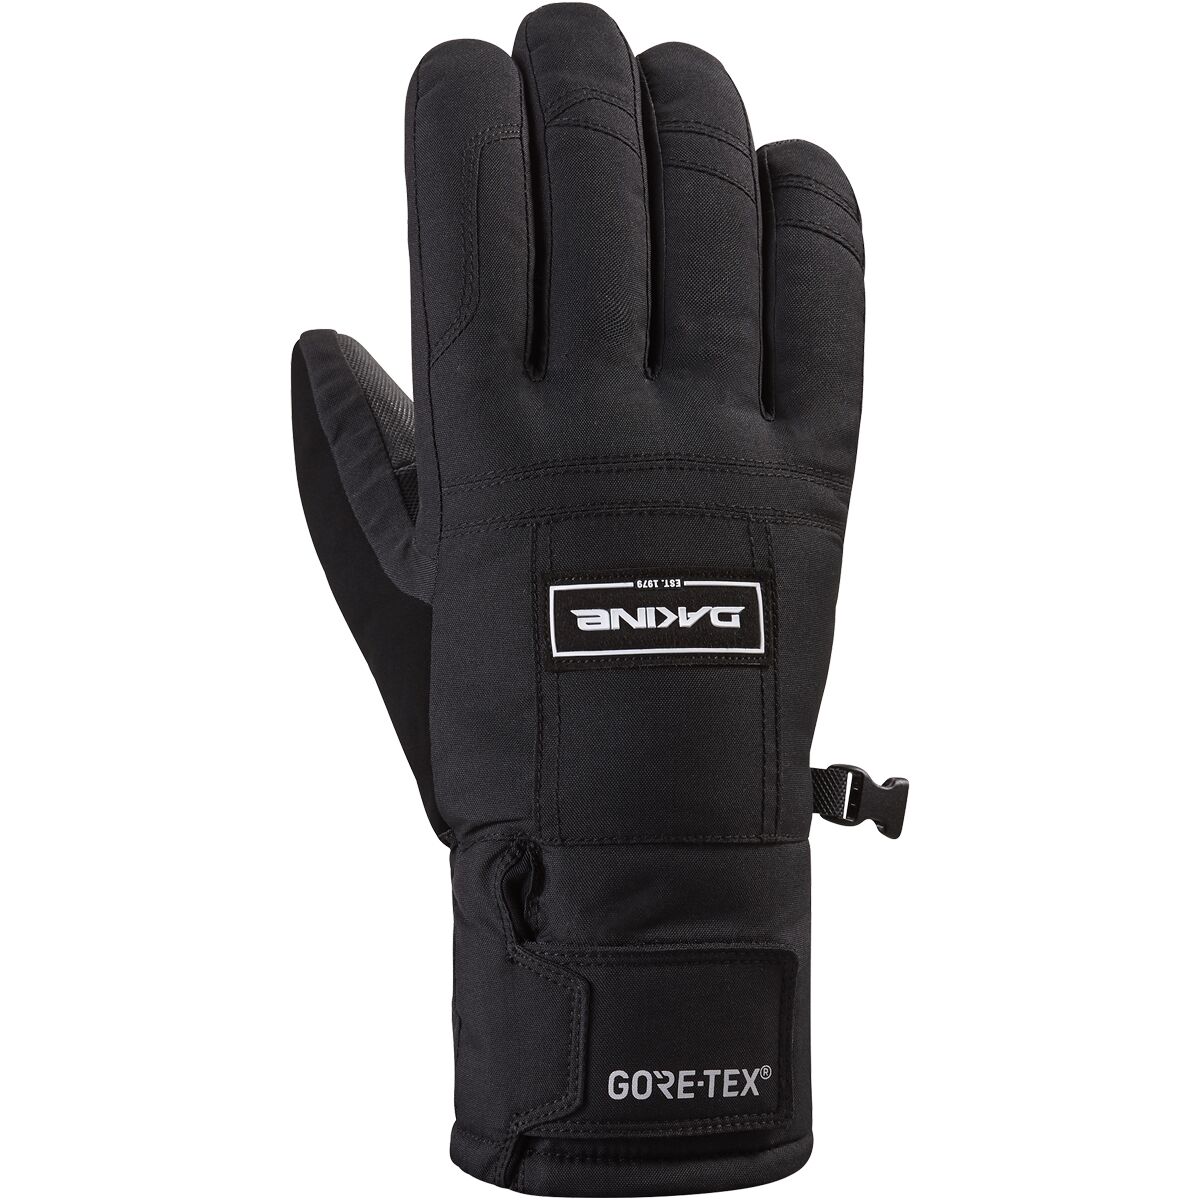 DAKINE Bronco GORE-TEX Glove - Men's Black